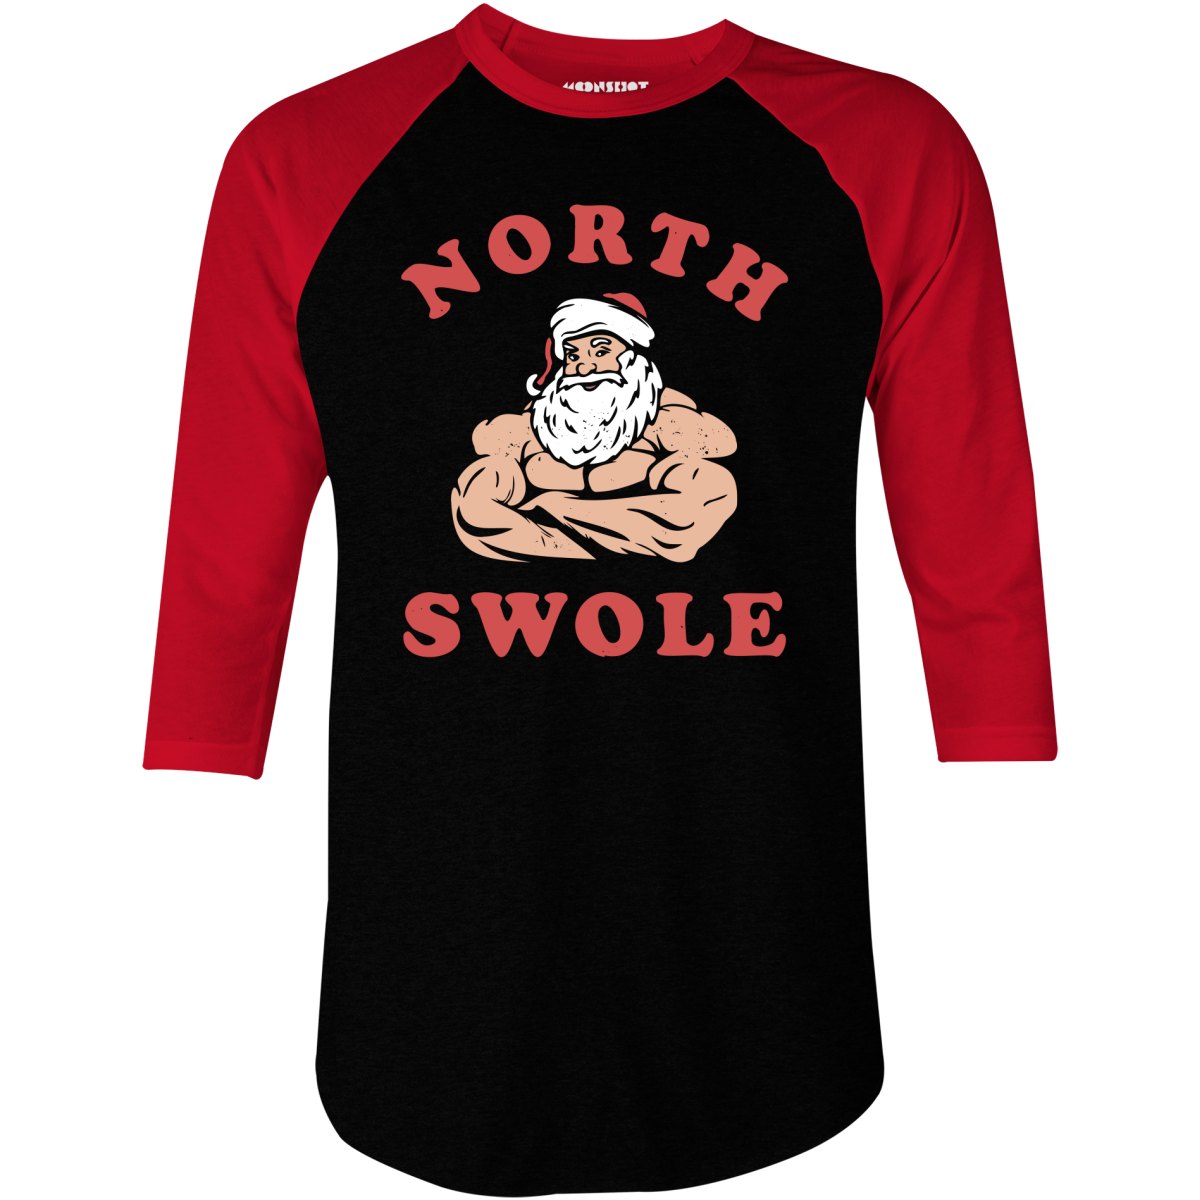 North Swole - 3/4 Sleeve Raglan T-Shirt